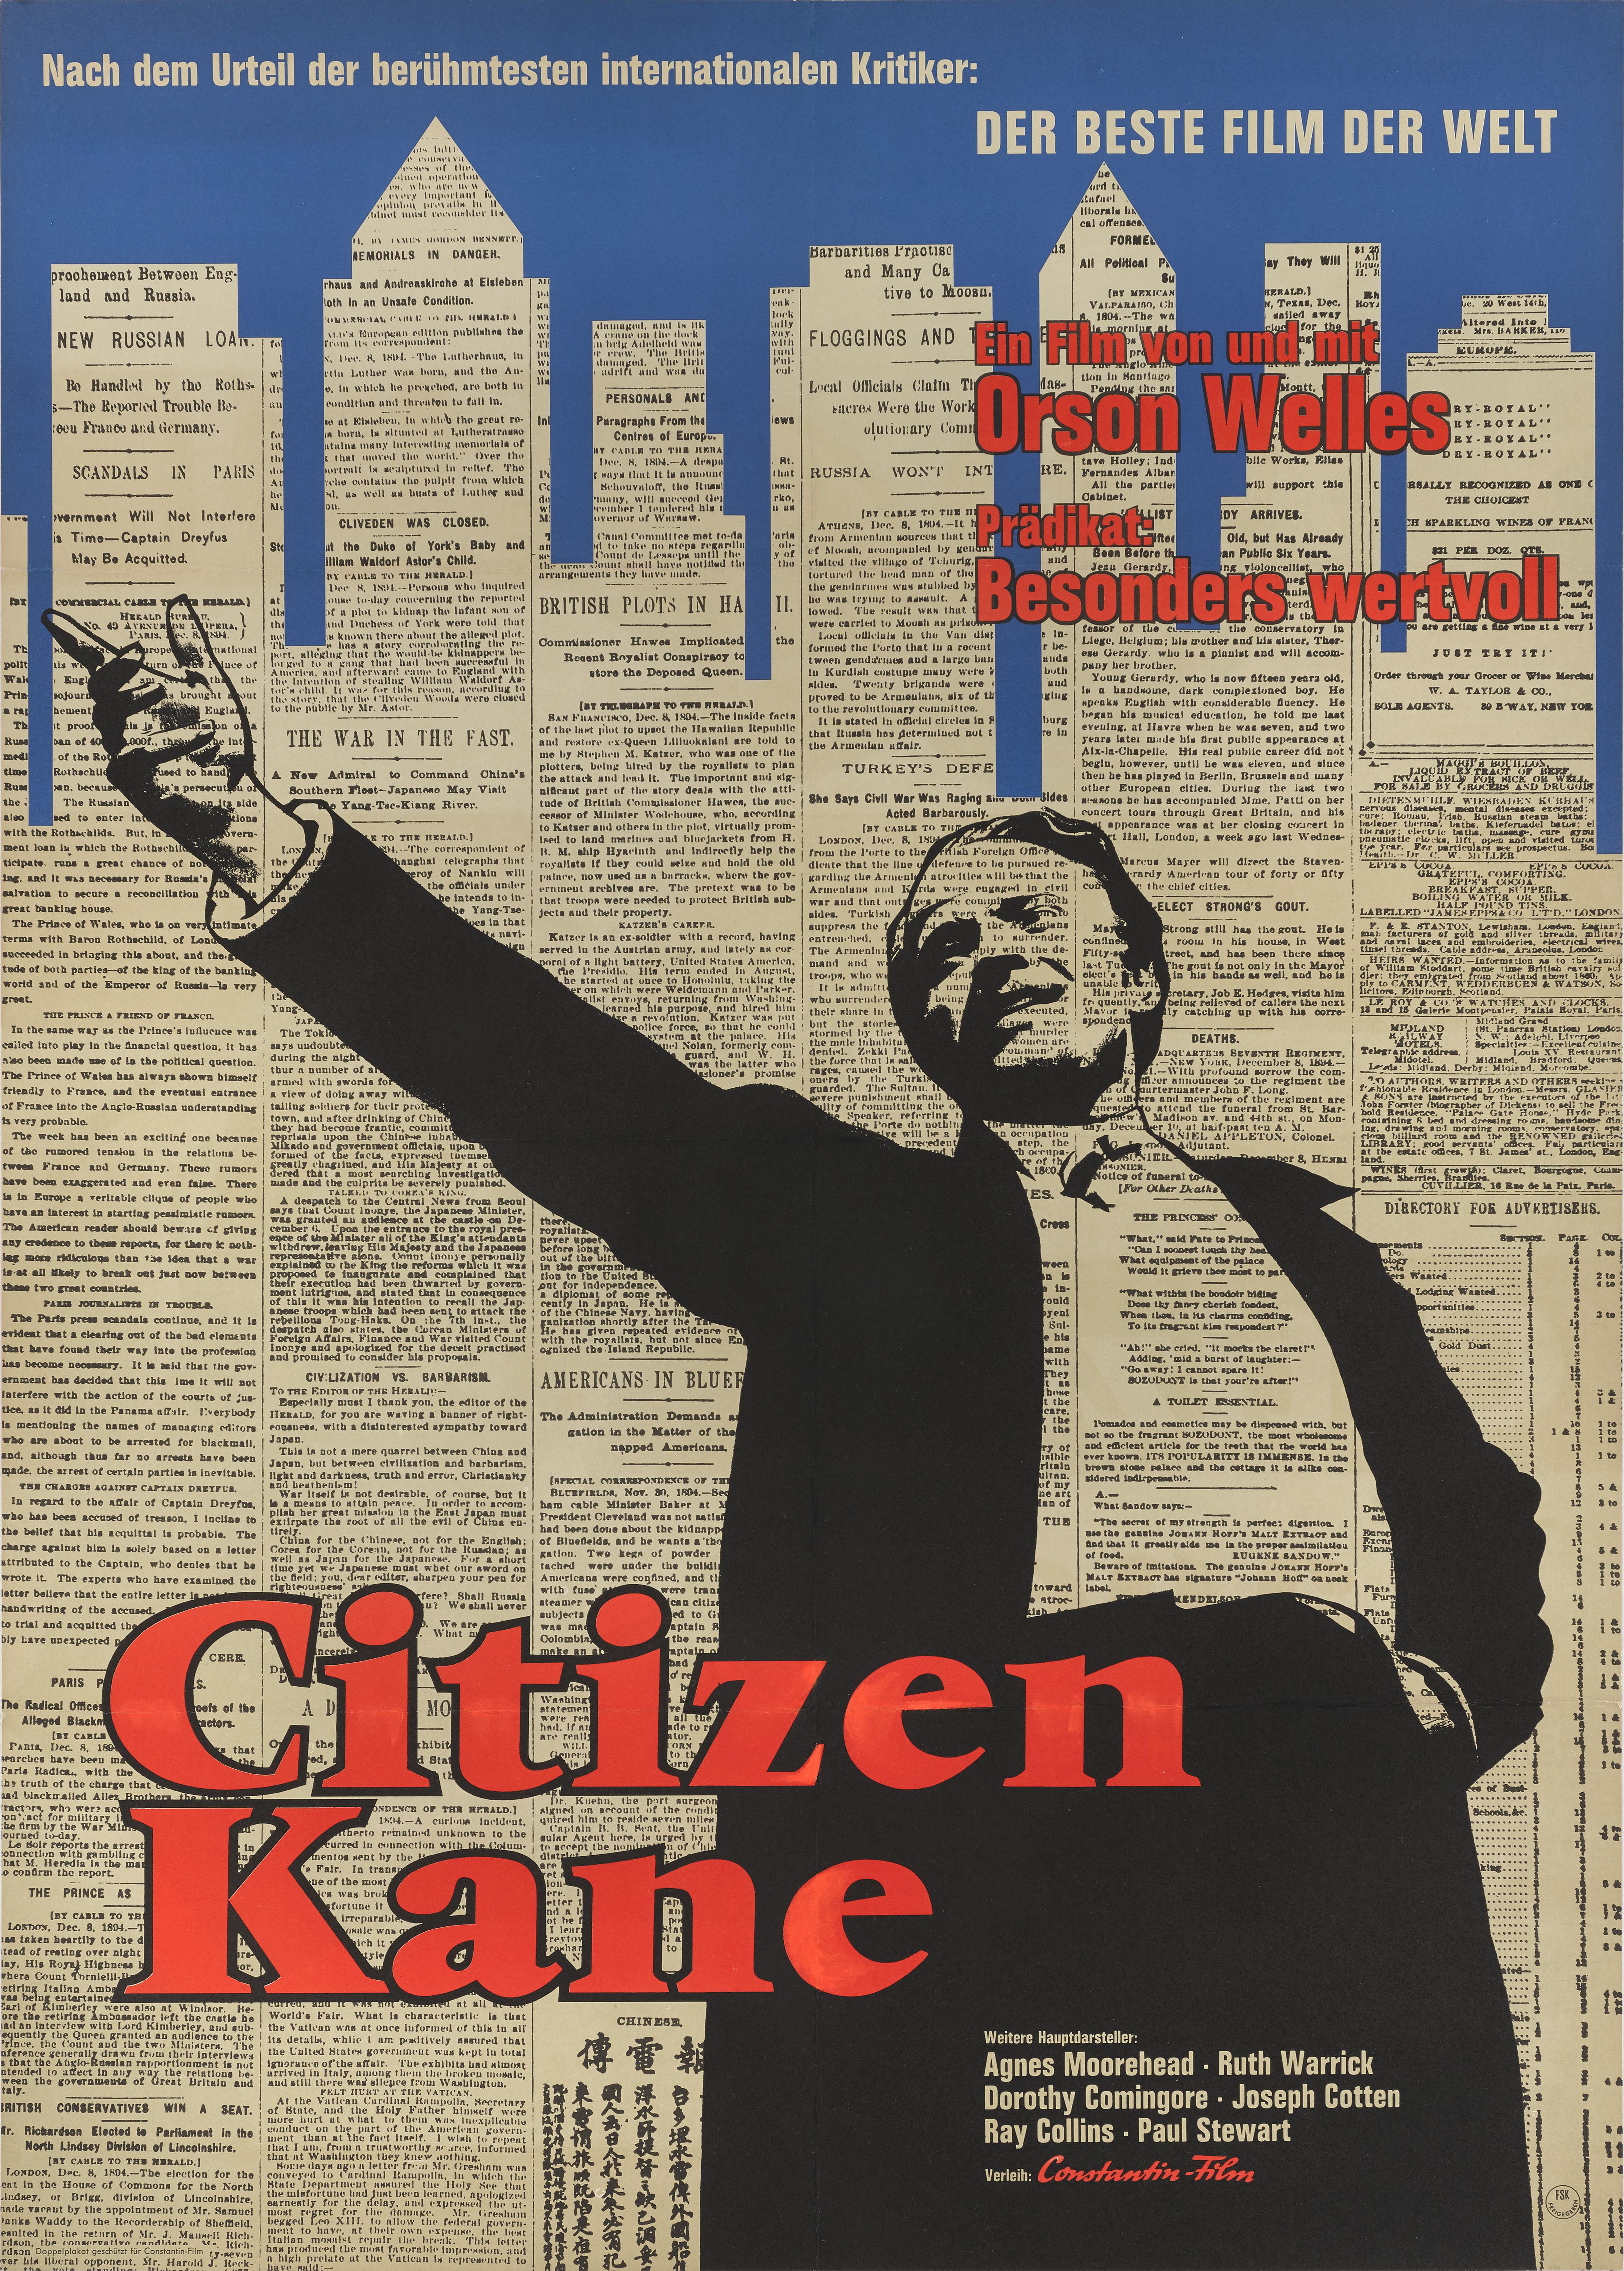 Swedish Citizen Kane For Sale